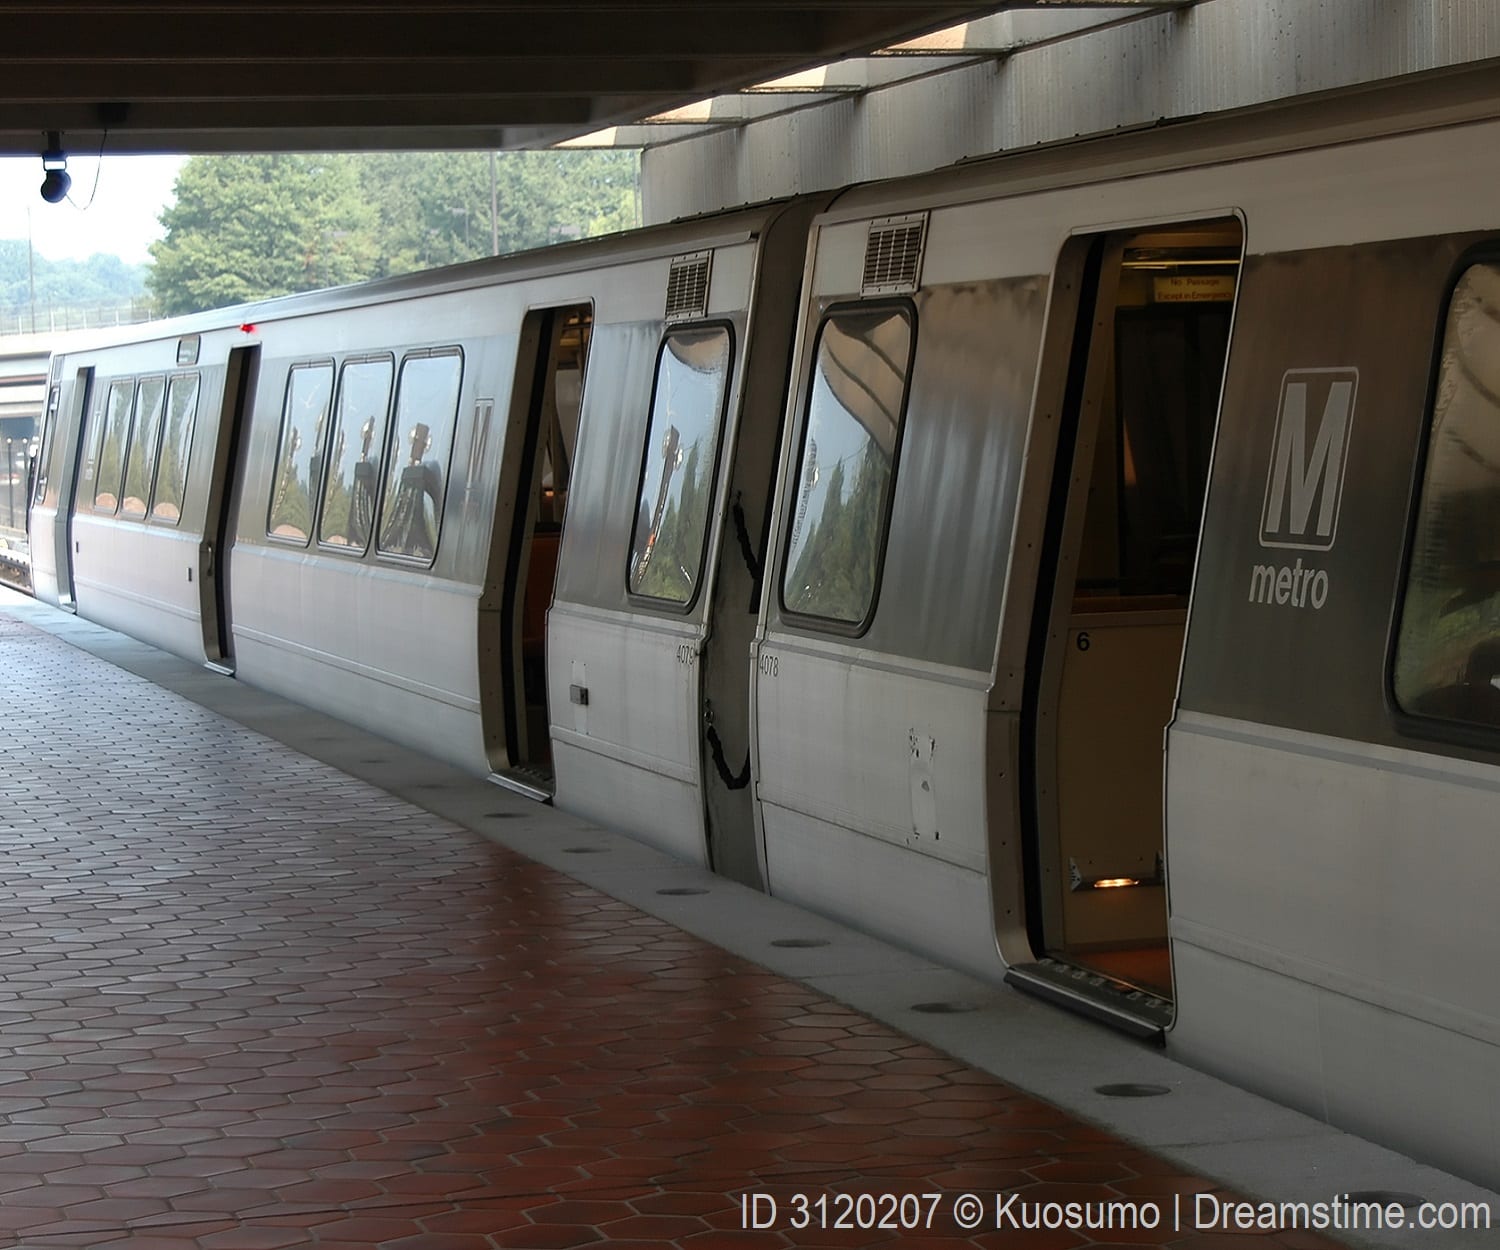 Public transportation in Washington, DC includes the metro